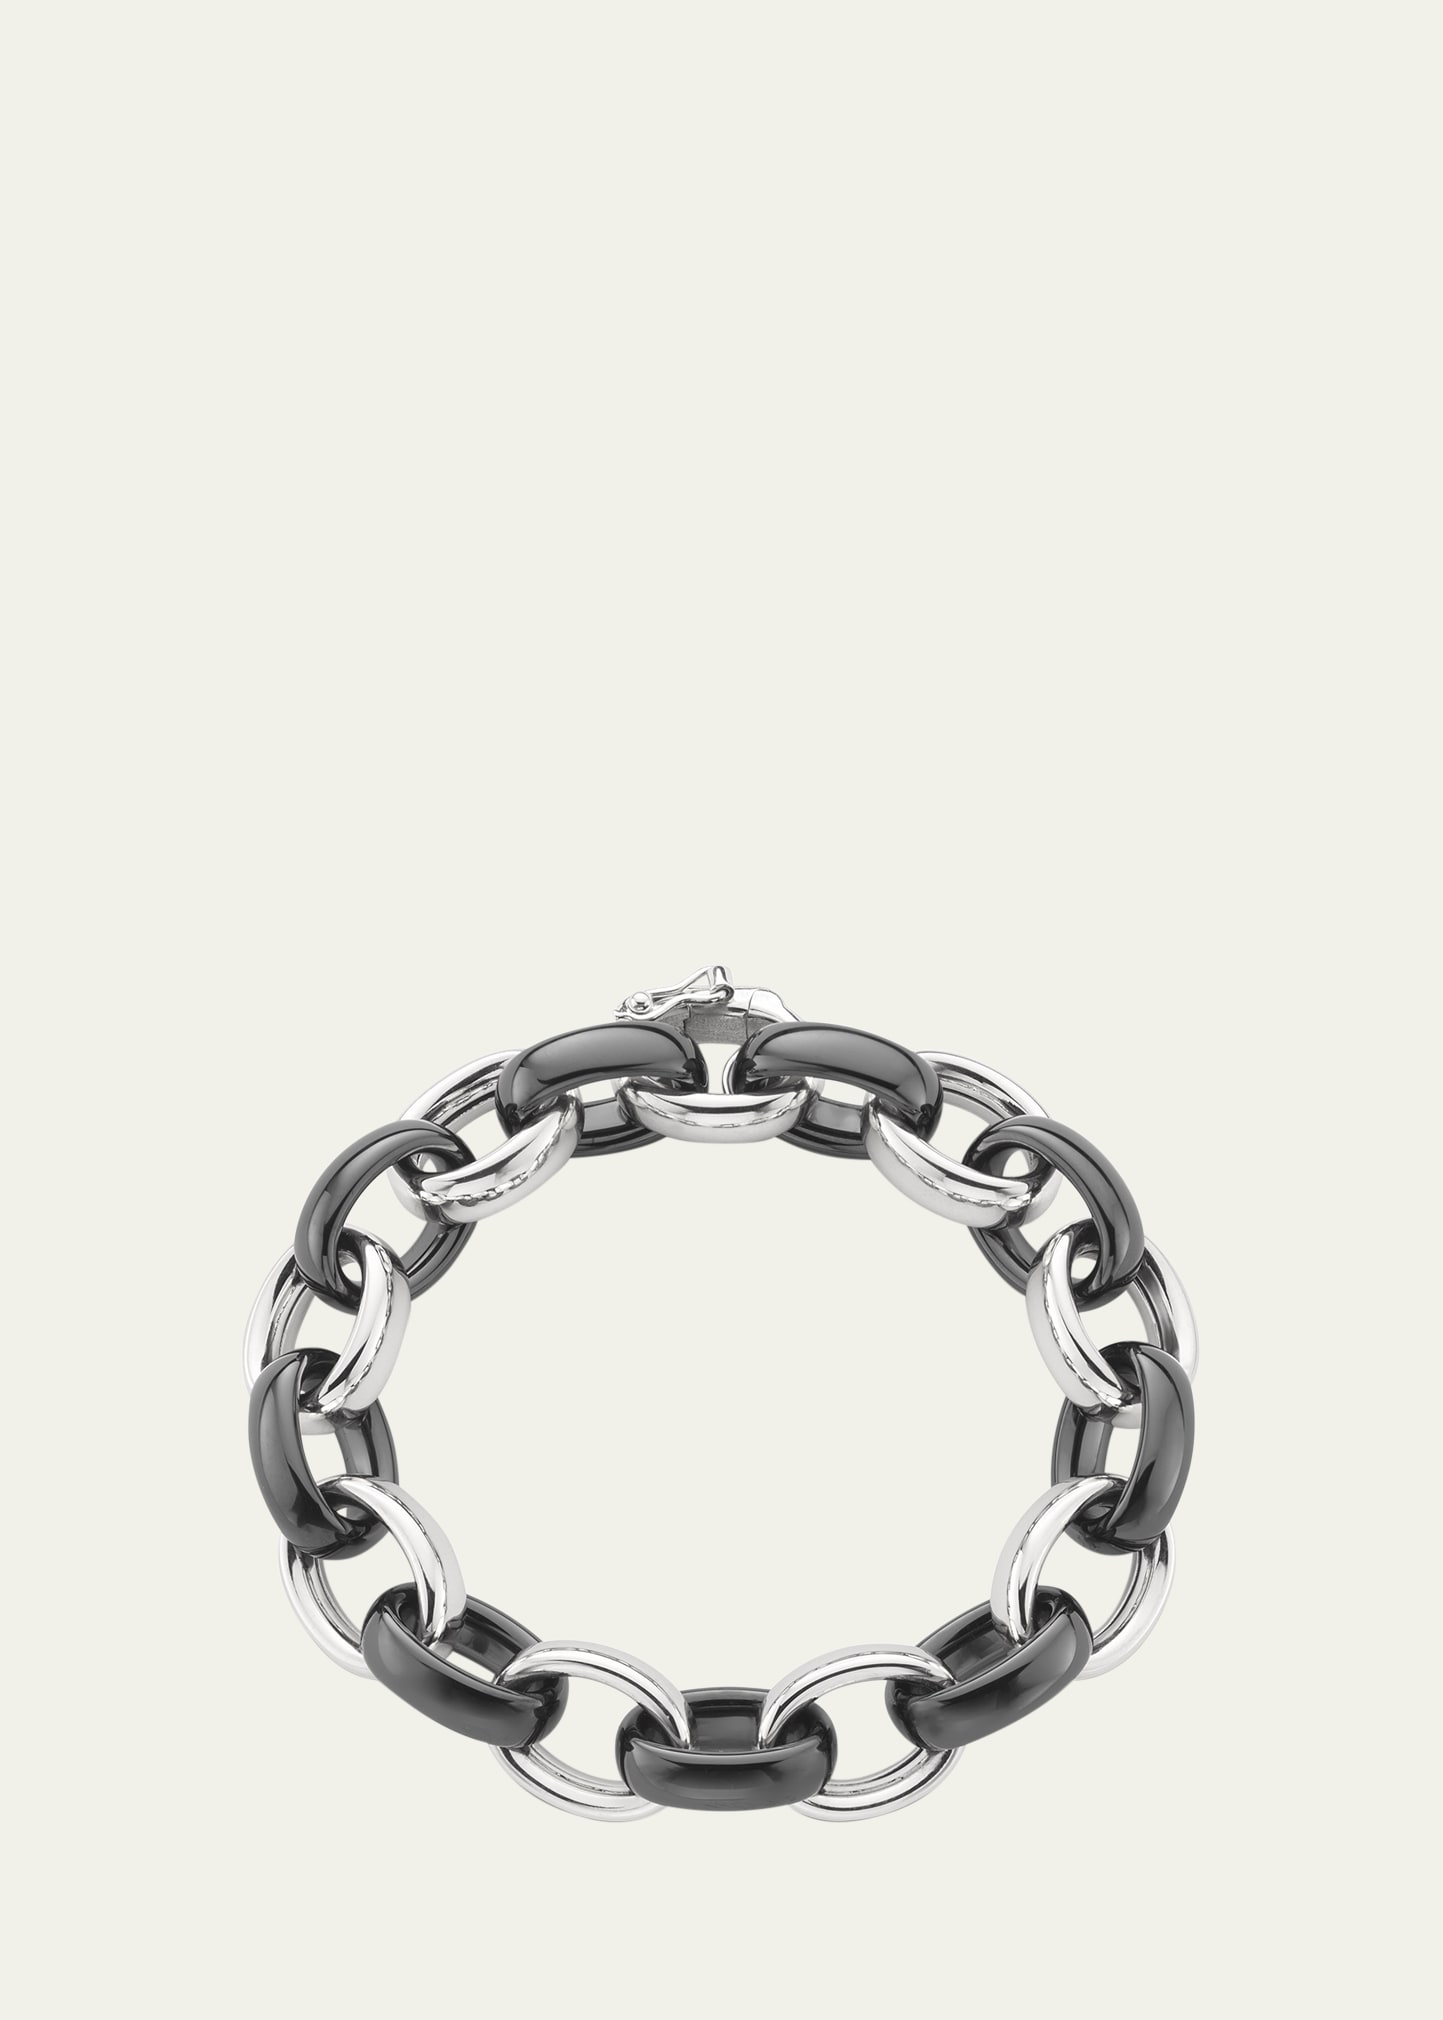 The Marilyn Sterling Silver and Black Ceramic Link Bracelet